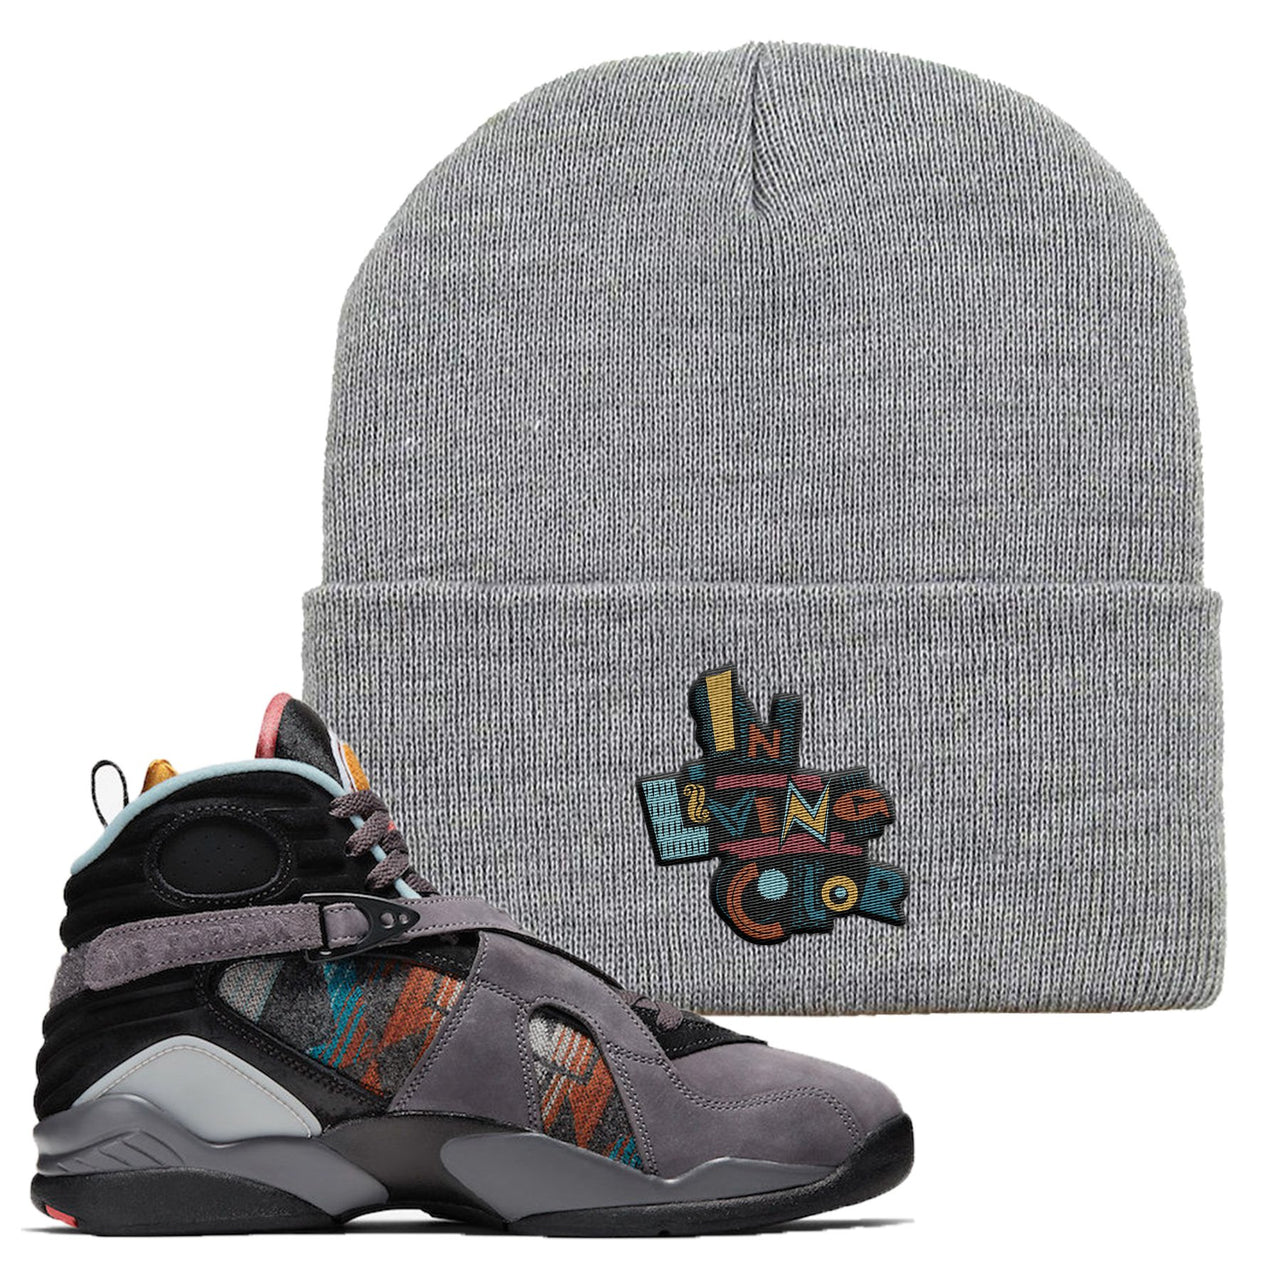 Jordan 8 N7 Pendleton In Living Color Light Gray Sneaker Hook Up Beanie